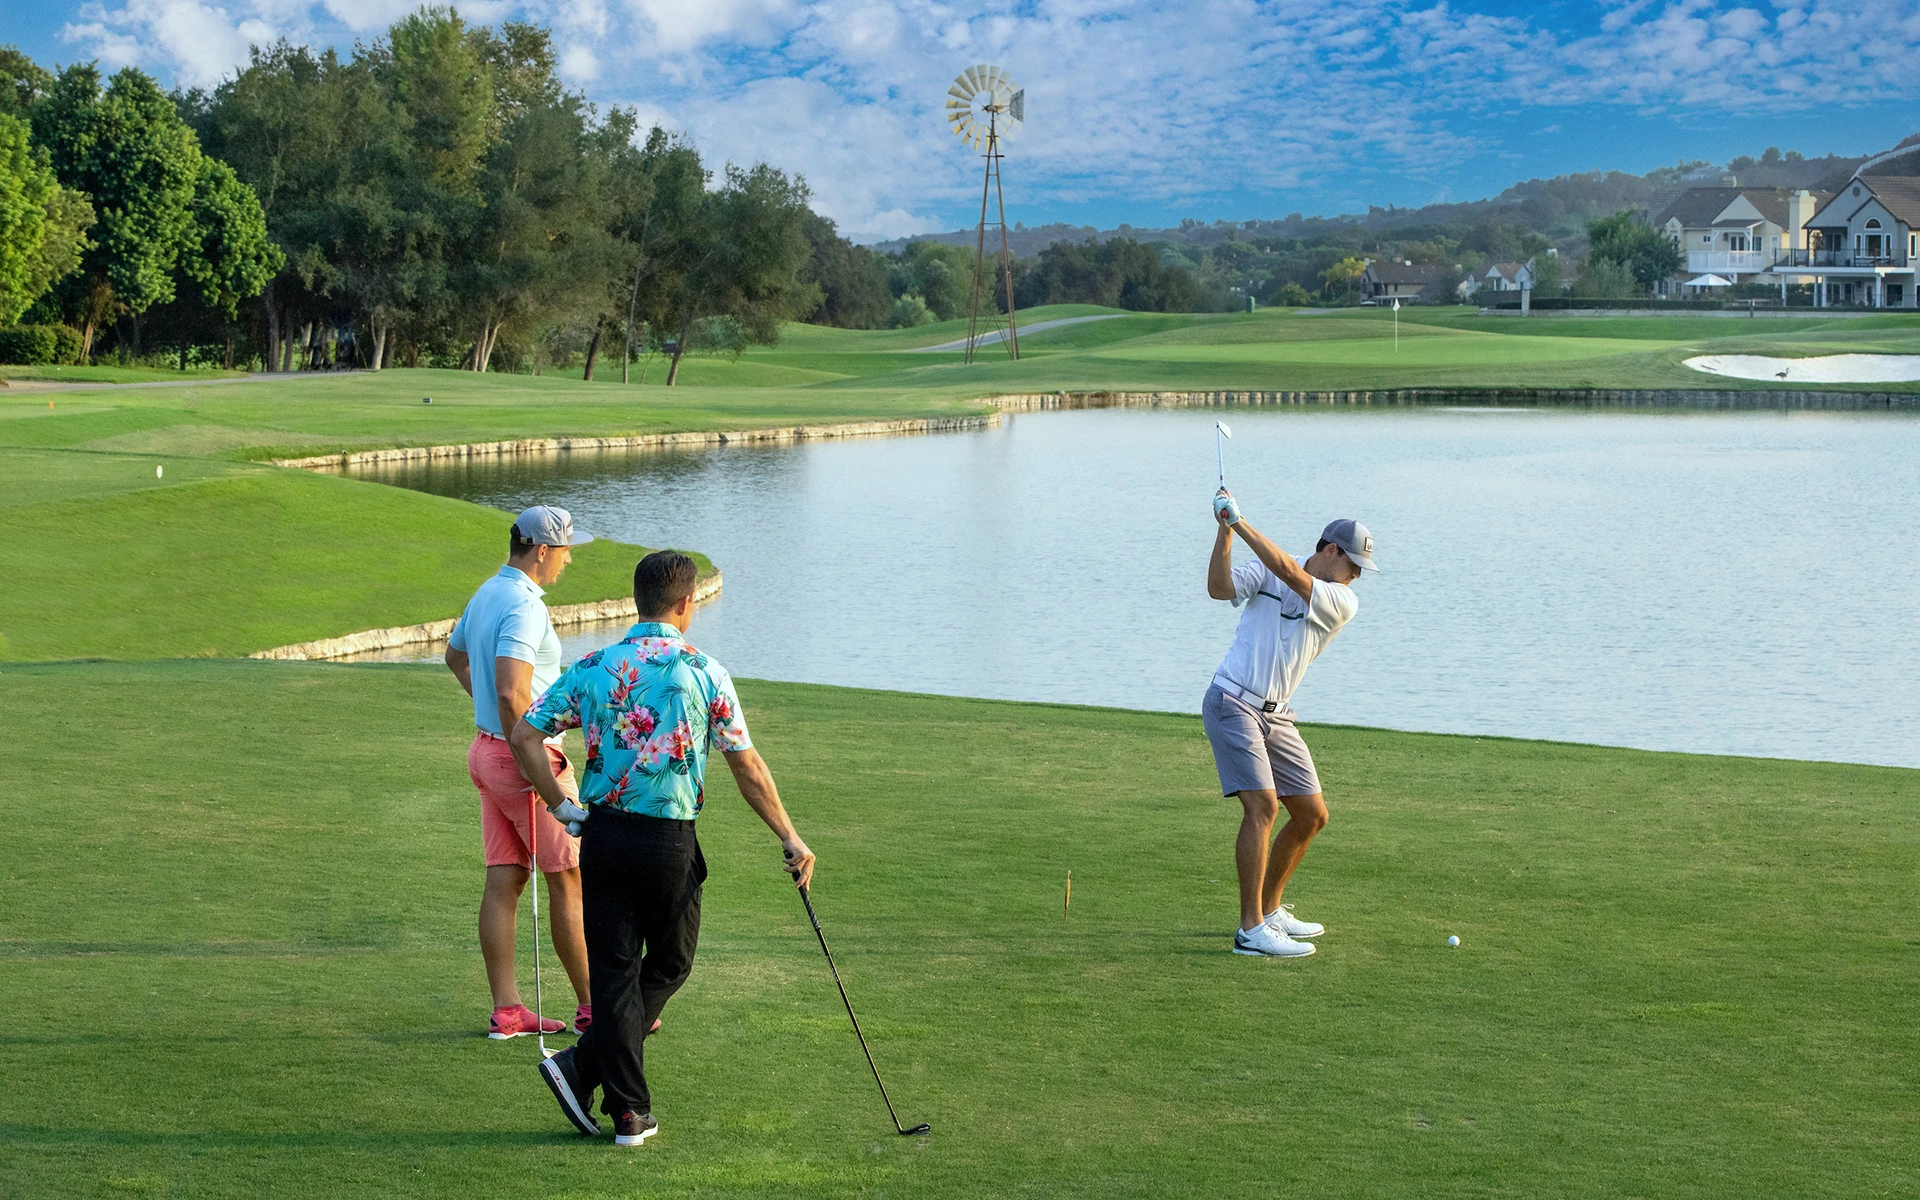 Magnificent Golf Courses for Successful Tournaments in Coto de Caza